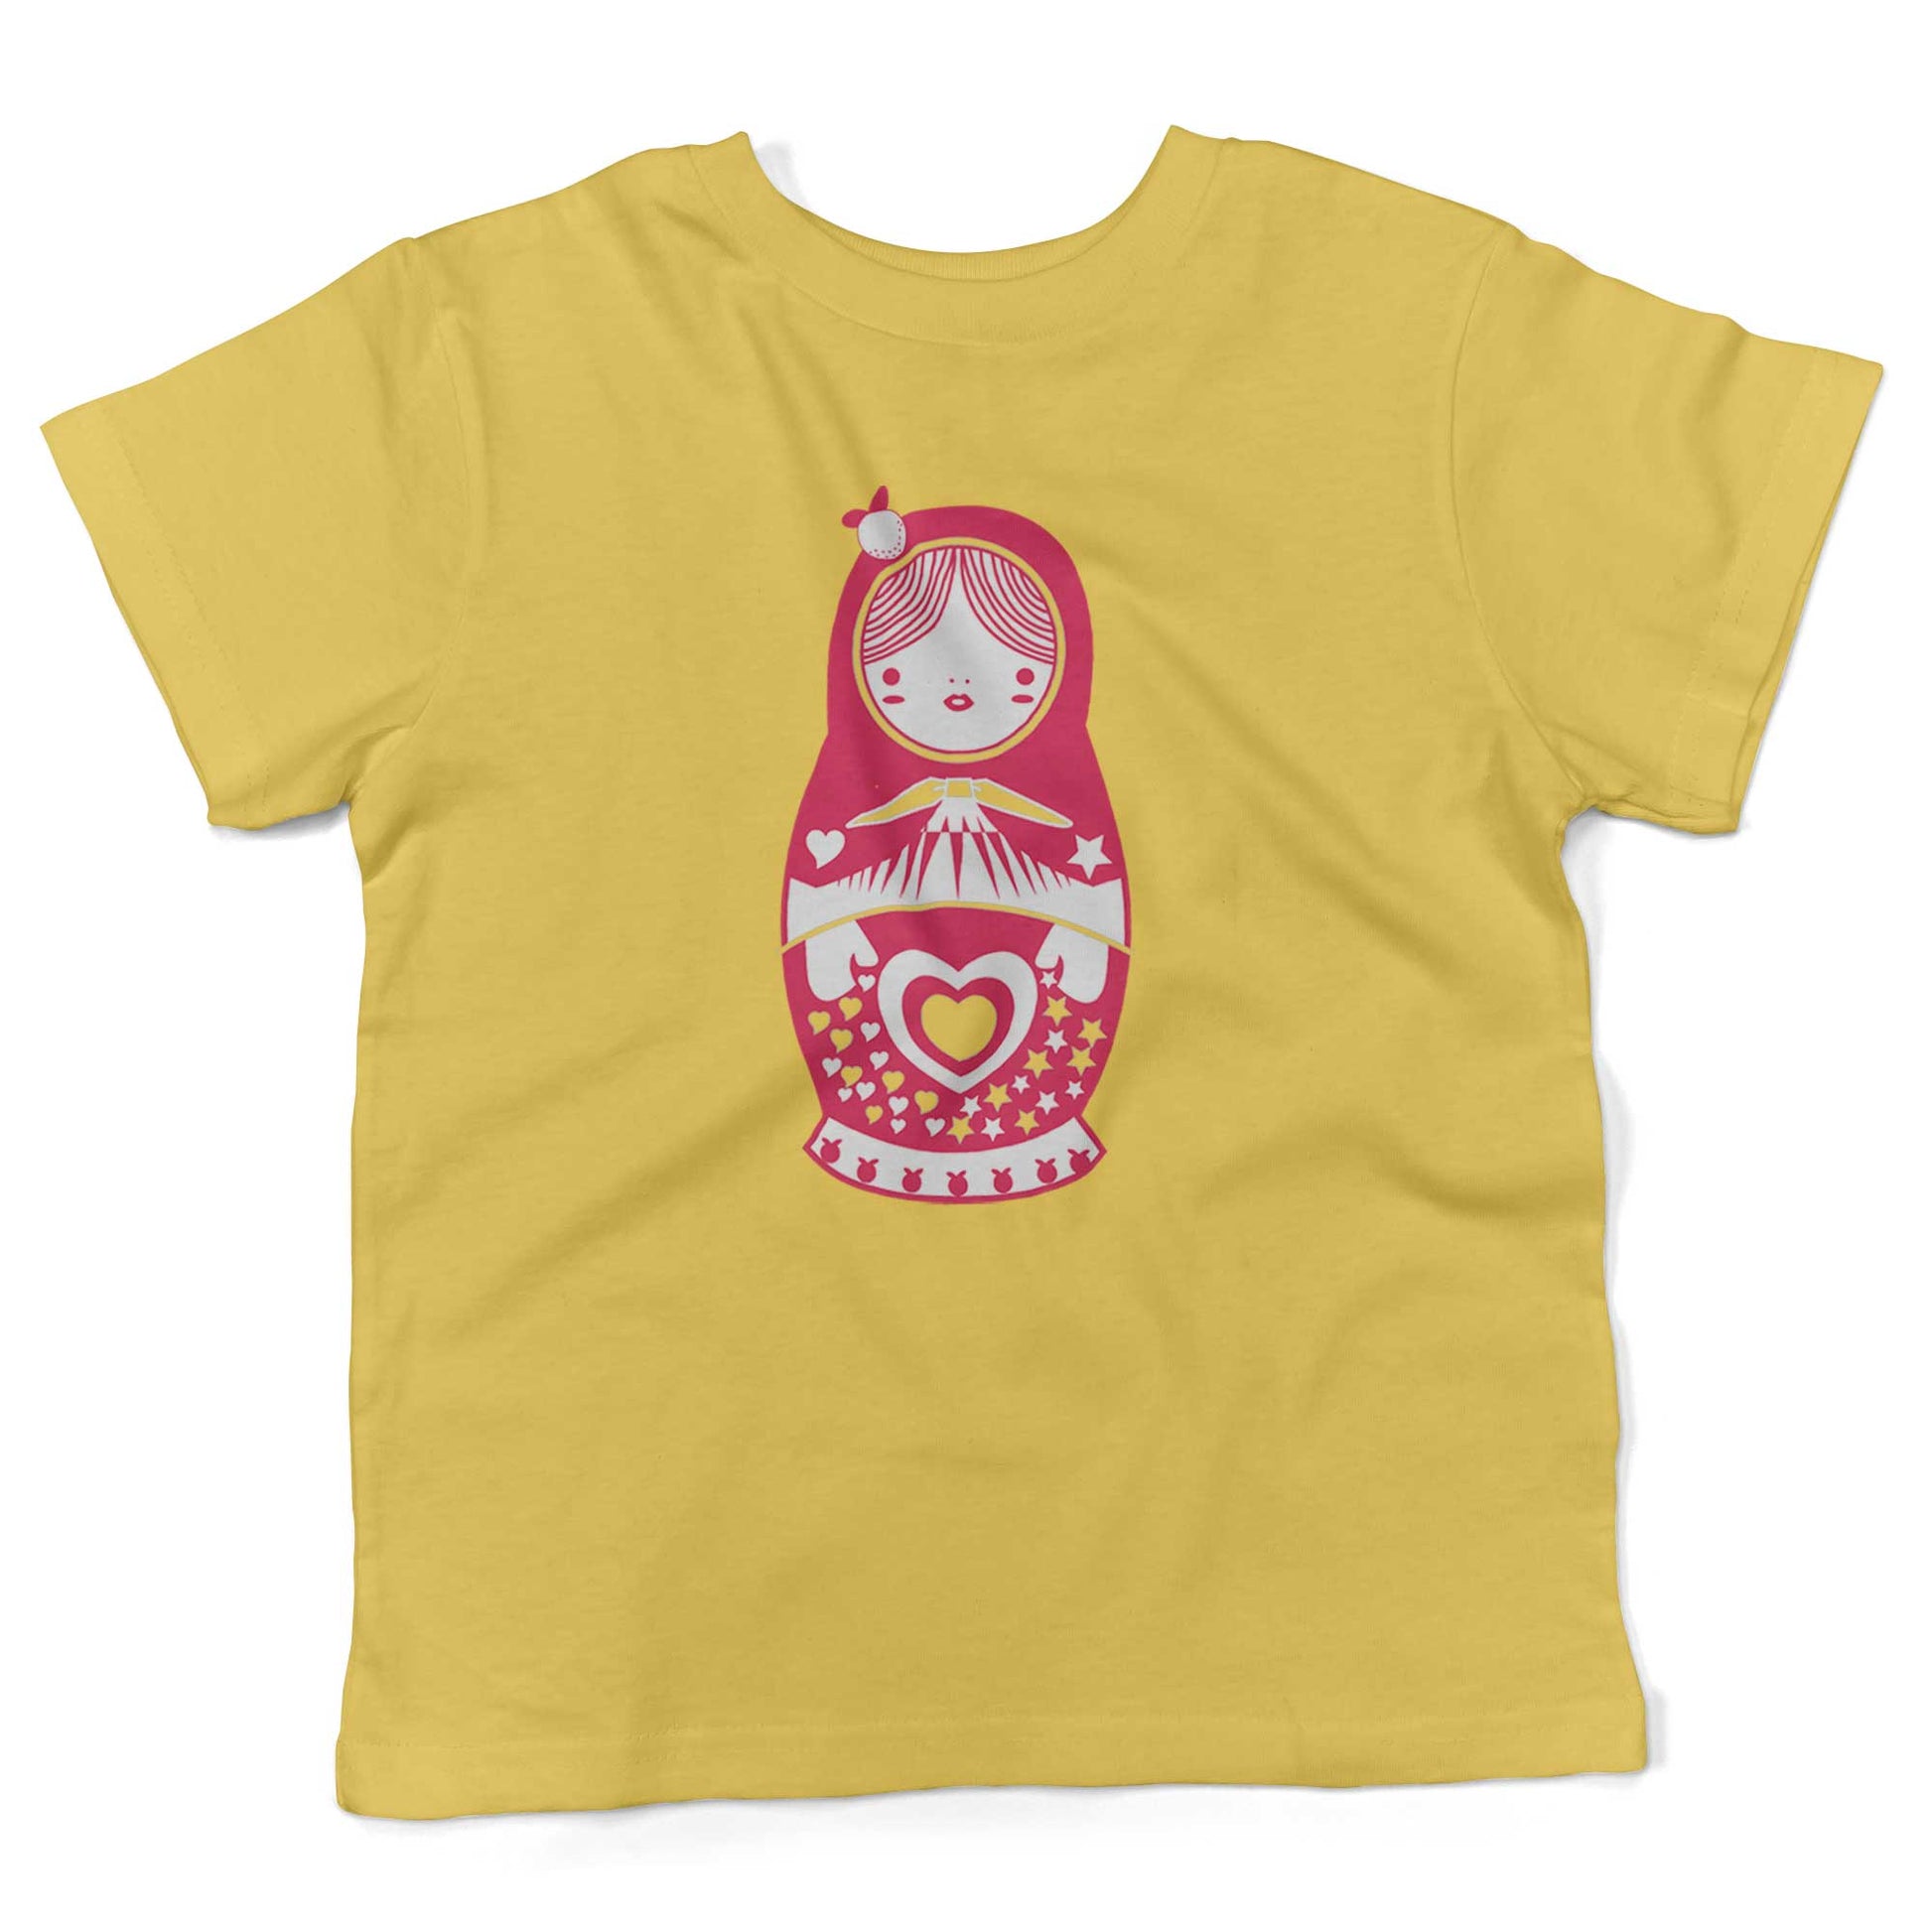 Russian Doll Toddler Shirt-Sunshine Yellow-2T